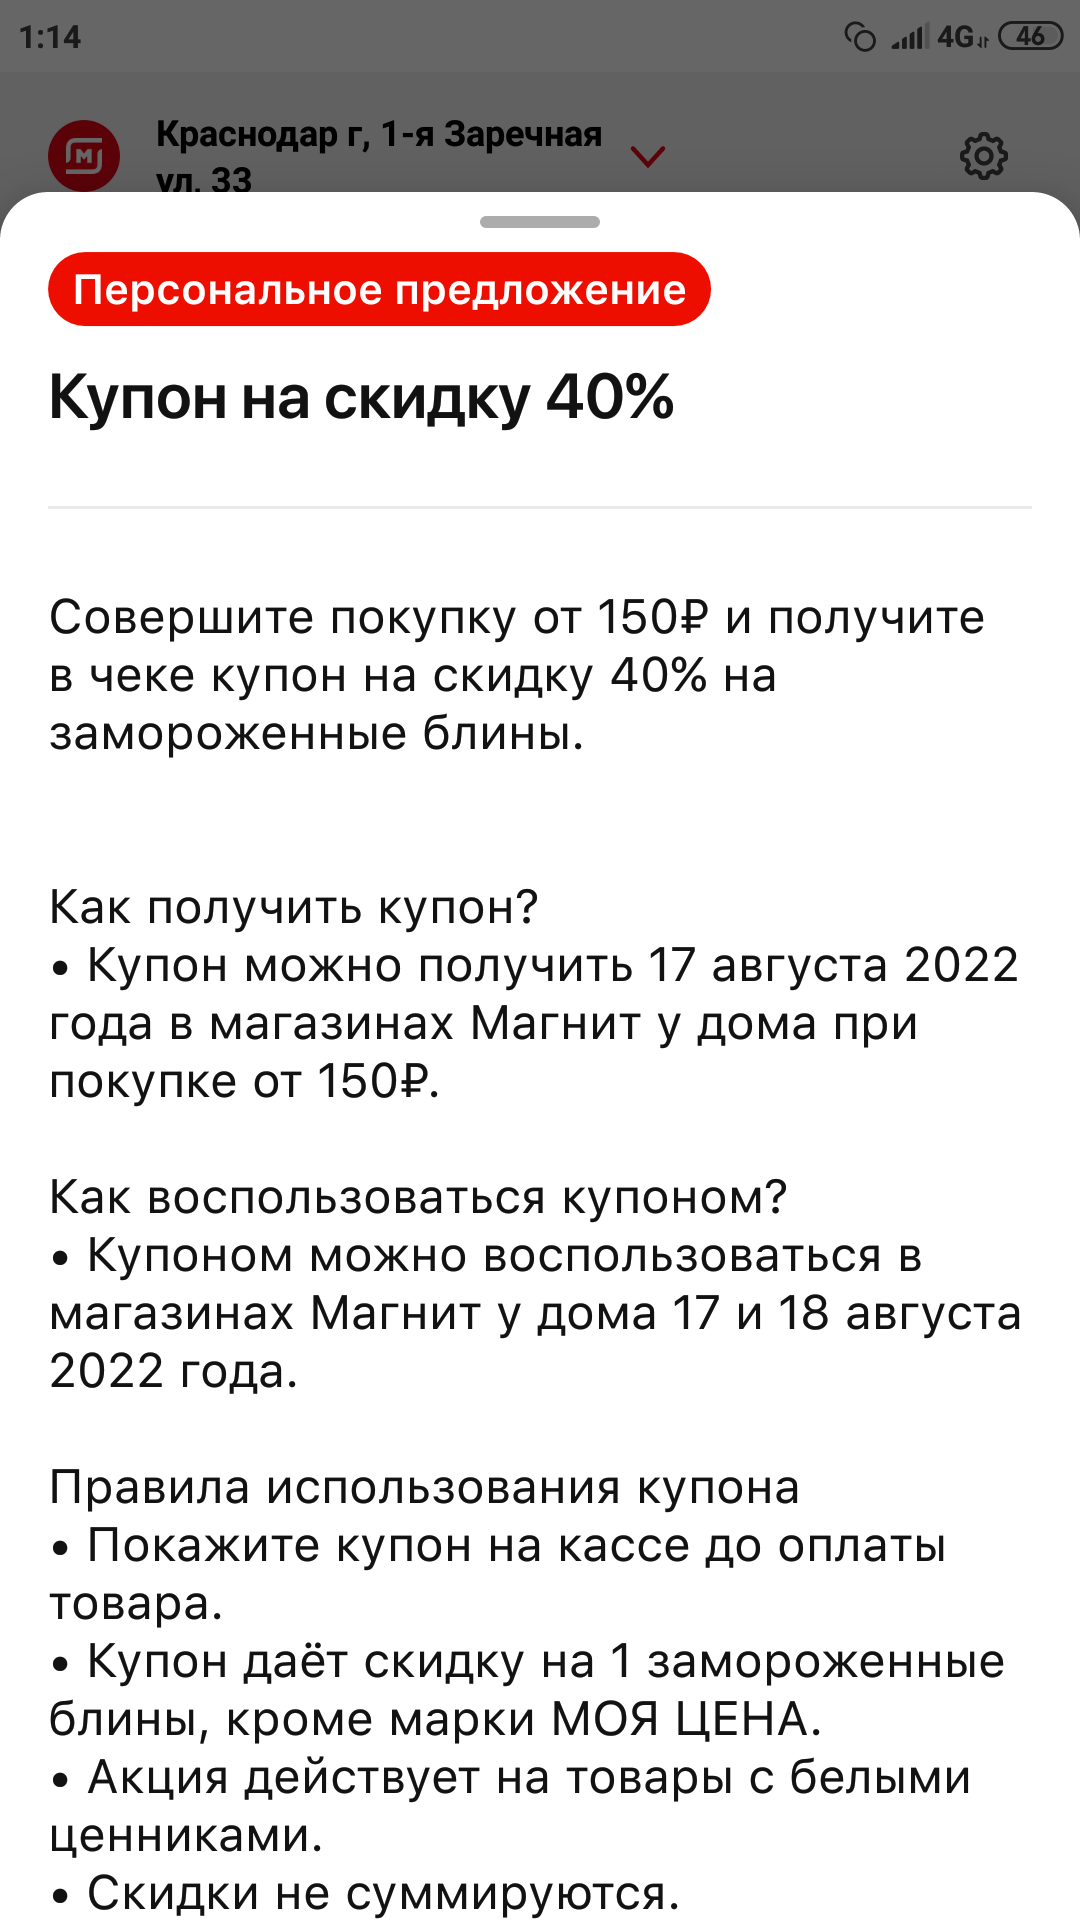 Screenshot_2022-08-17-01-14-43-814_ru.tander.magnit.png